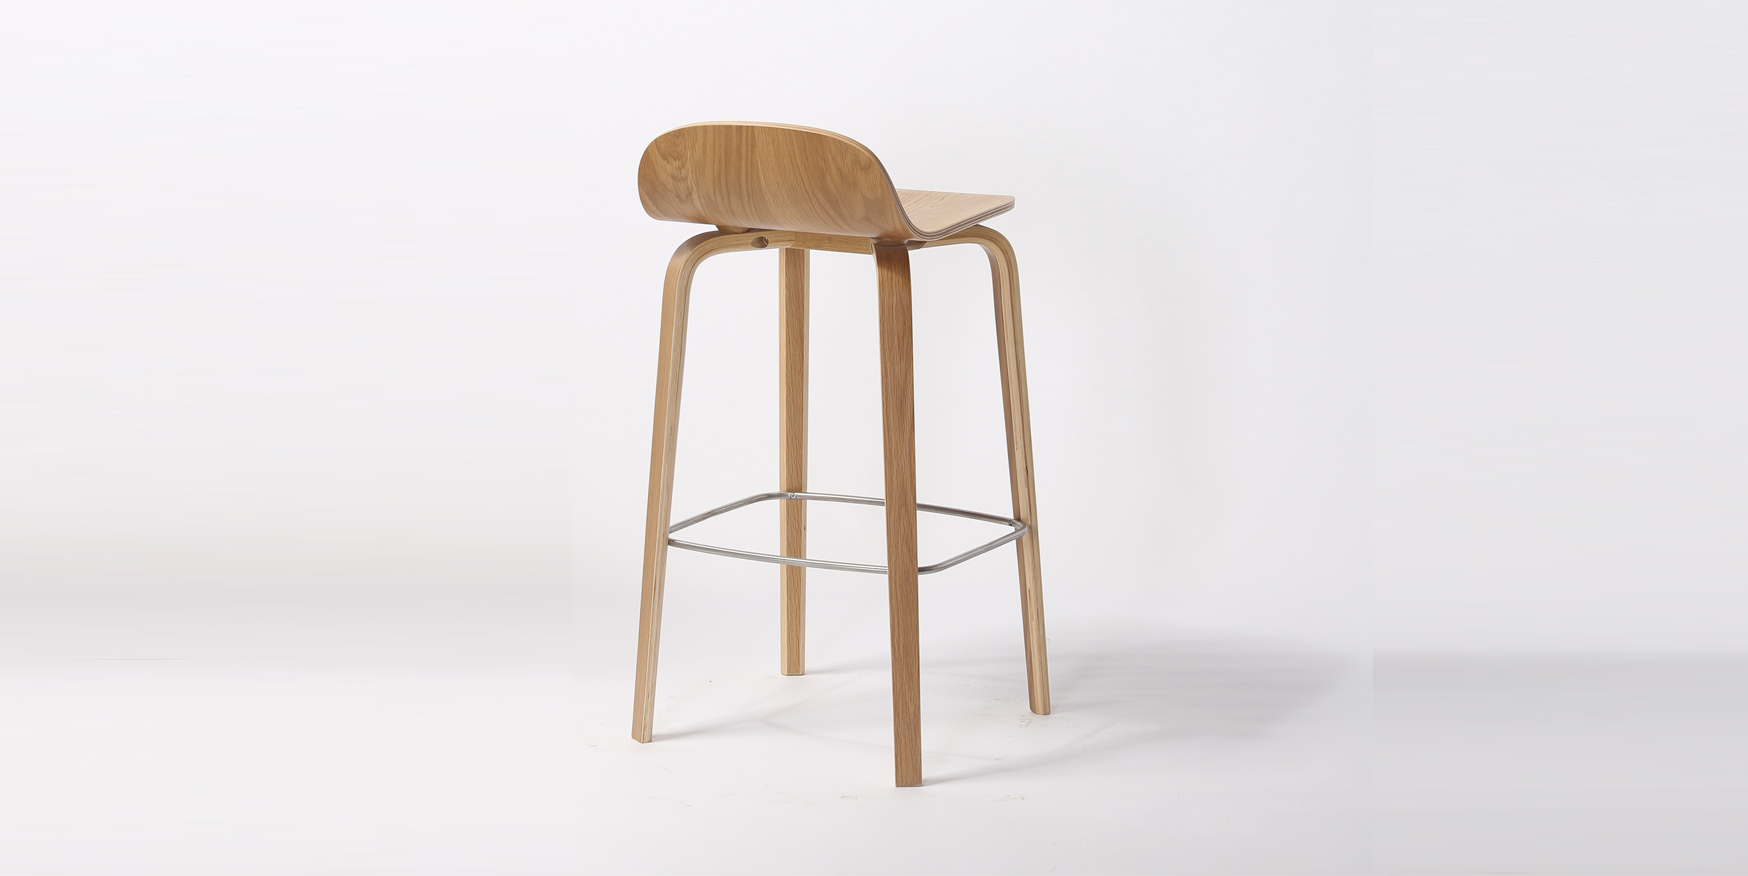 bent plywood stool
